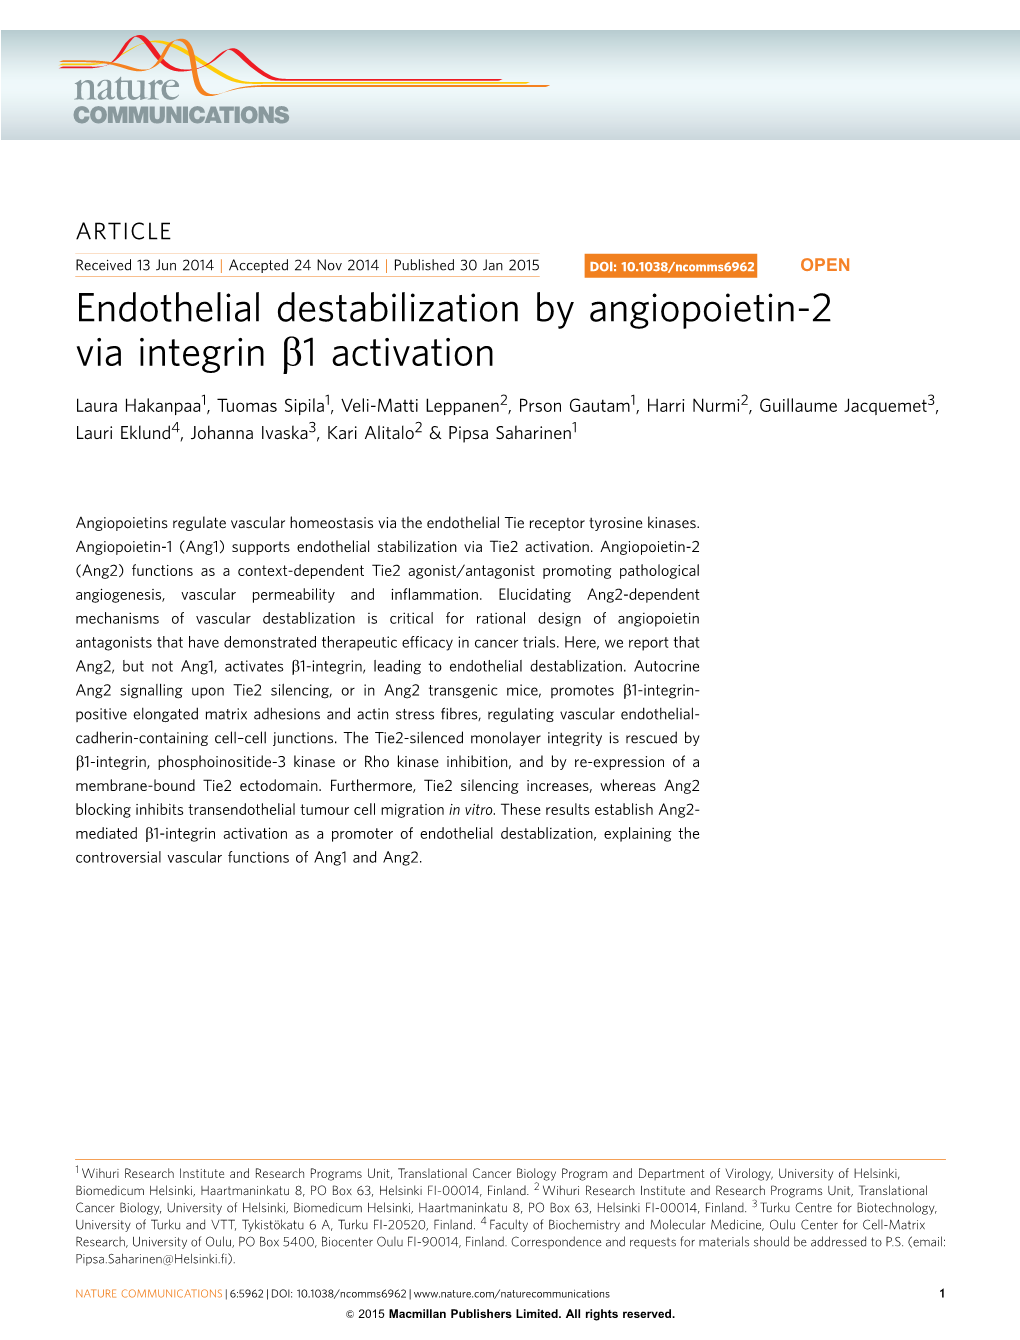 Endothelial Destabilization by Angiopoietin-2 Via Integrin B1 Activation